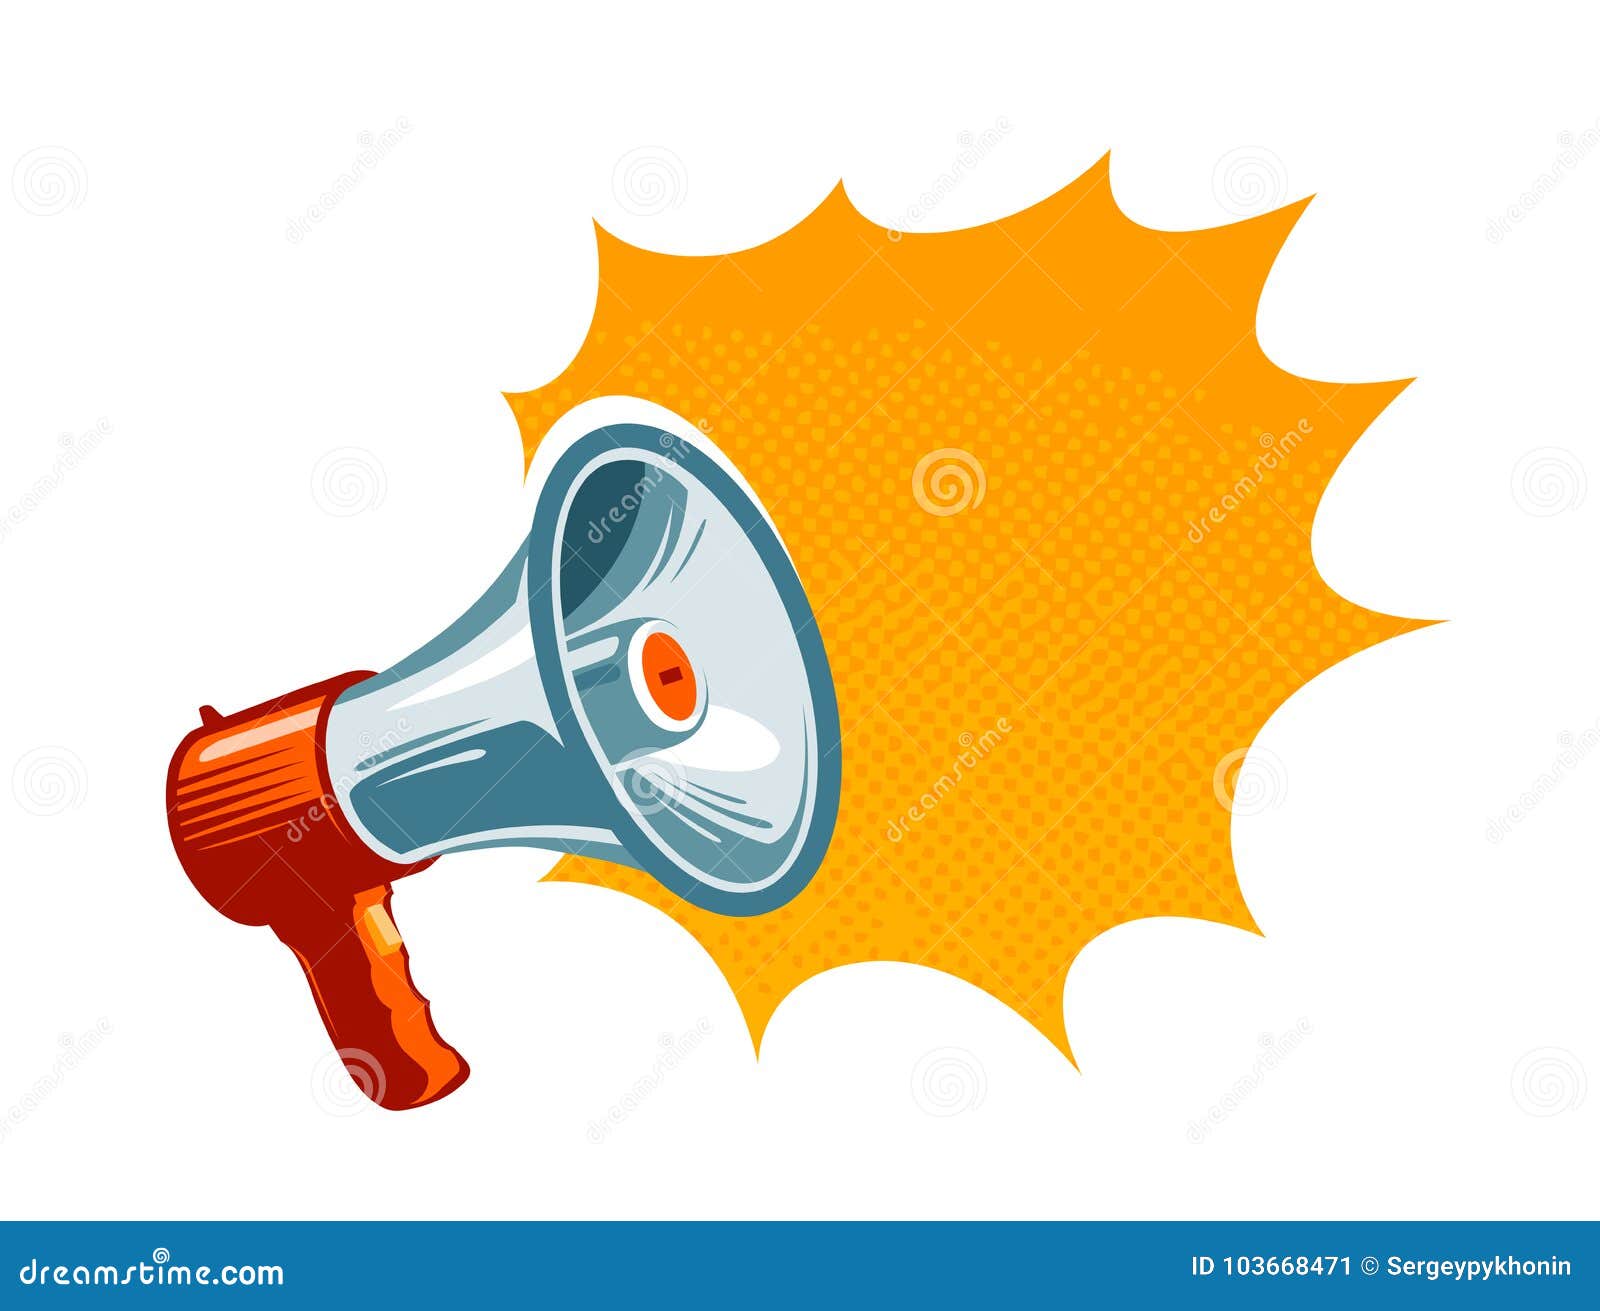 loudspeaker, megaphone, bullhorn icon or . advertising, promotion concept.  